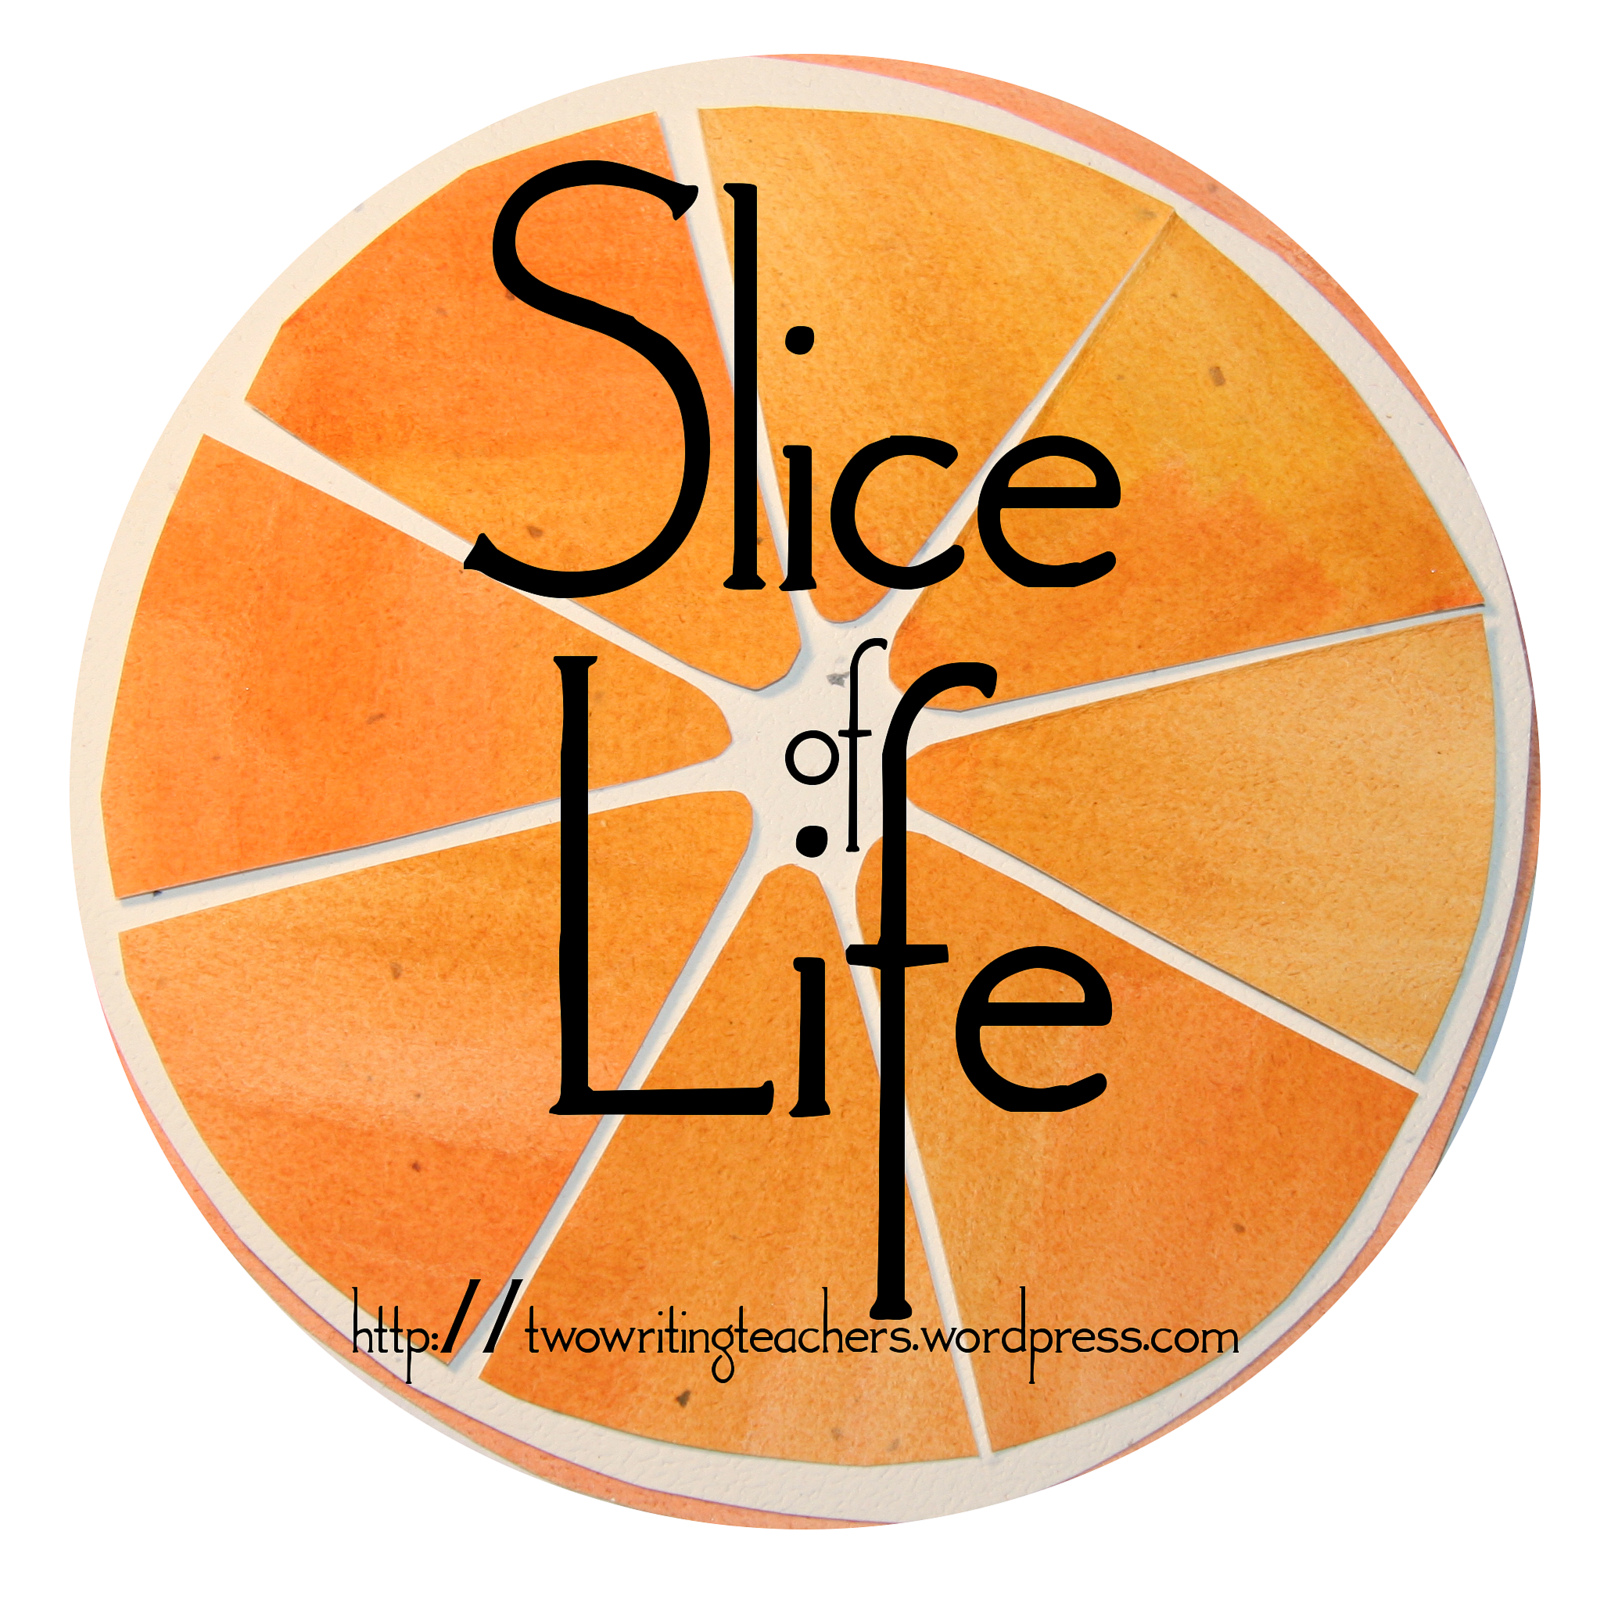 Slice of Life 2014